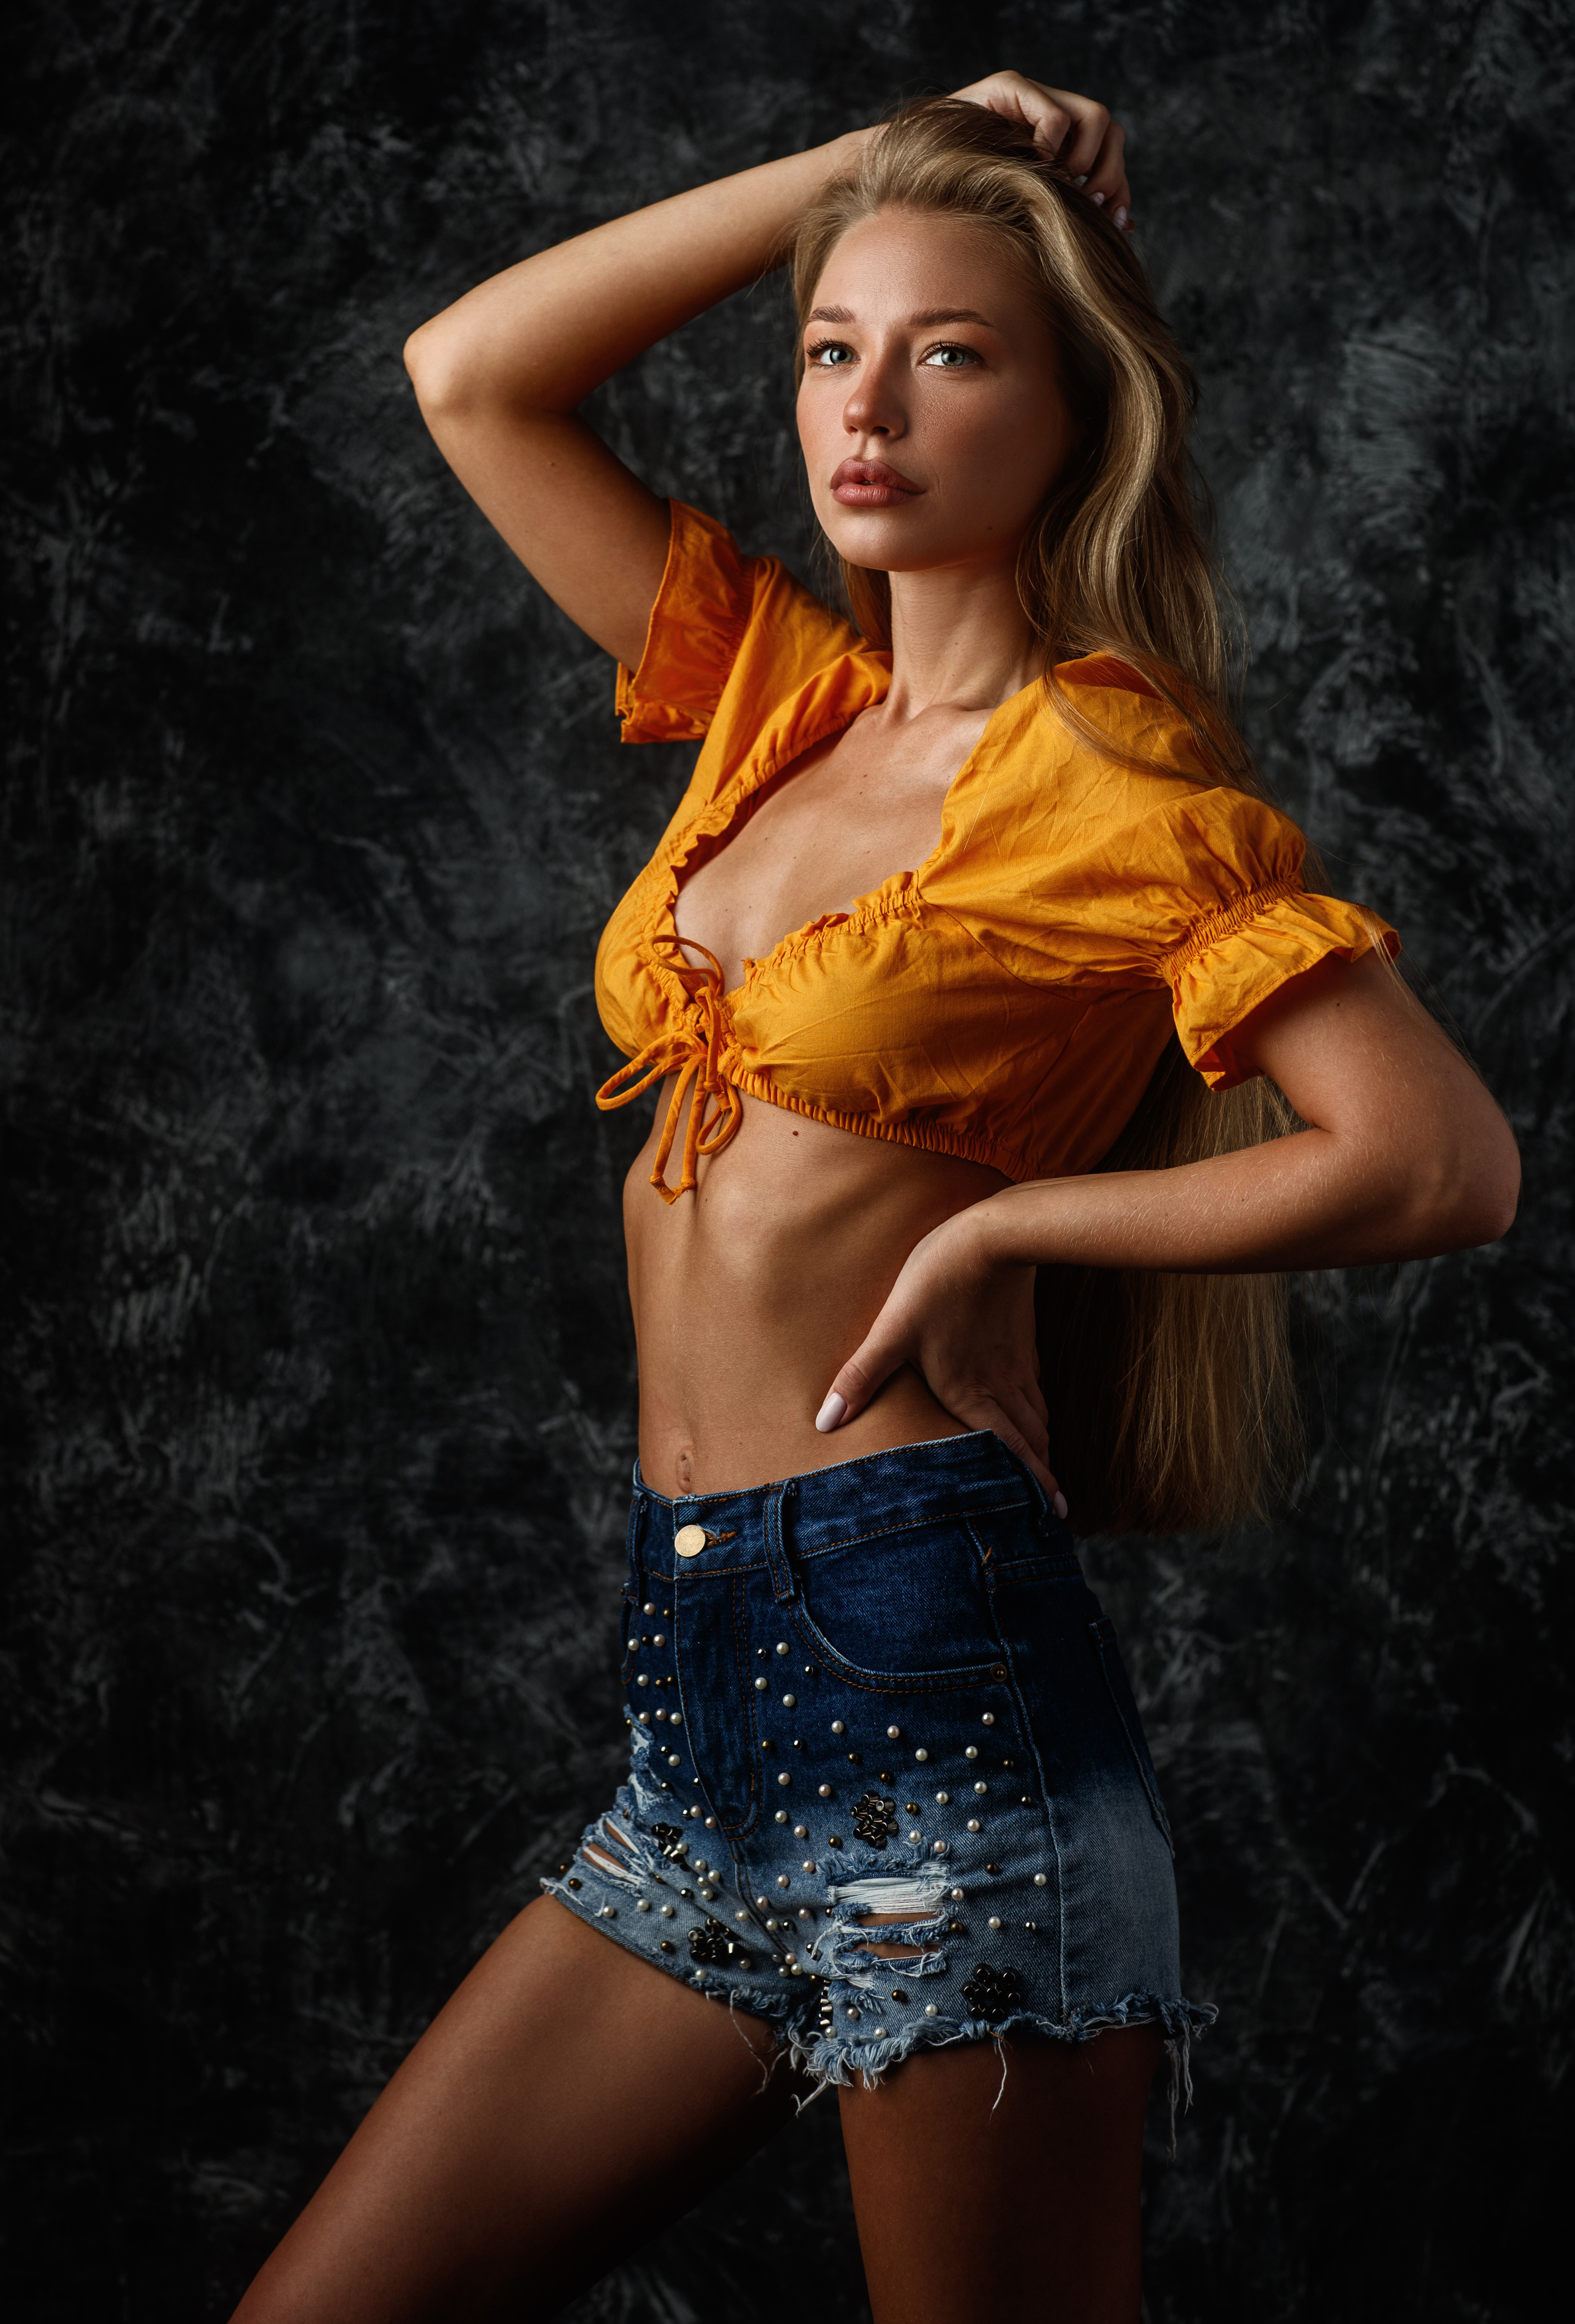 People 2372x3500 Sergey Sorokin women blonde long hair knot shorts denim simple background orange tops